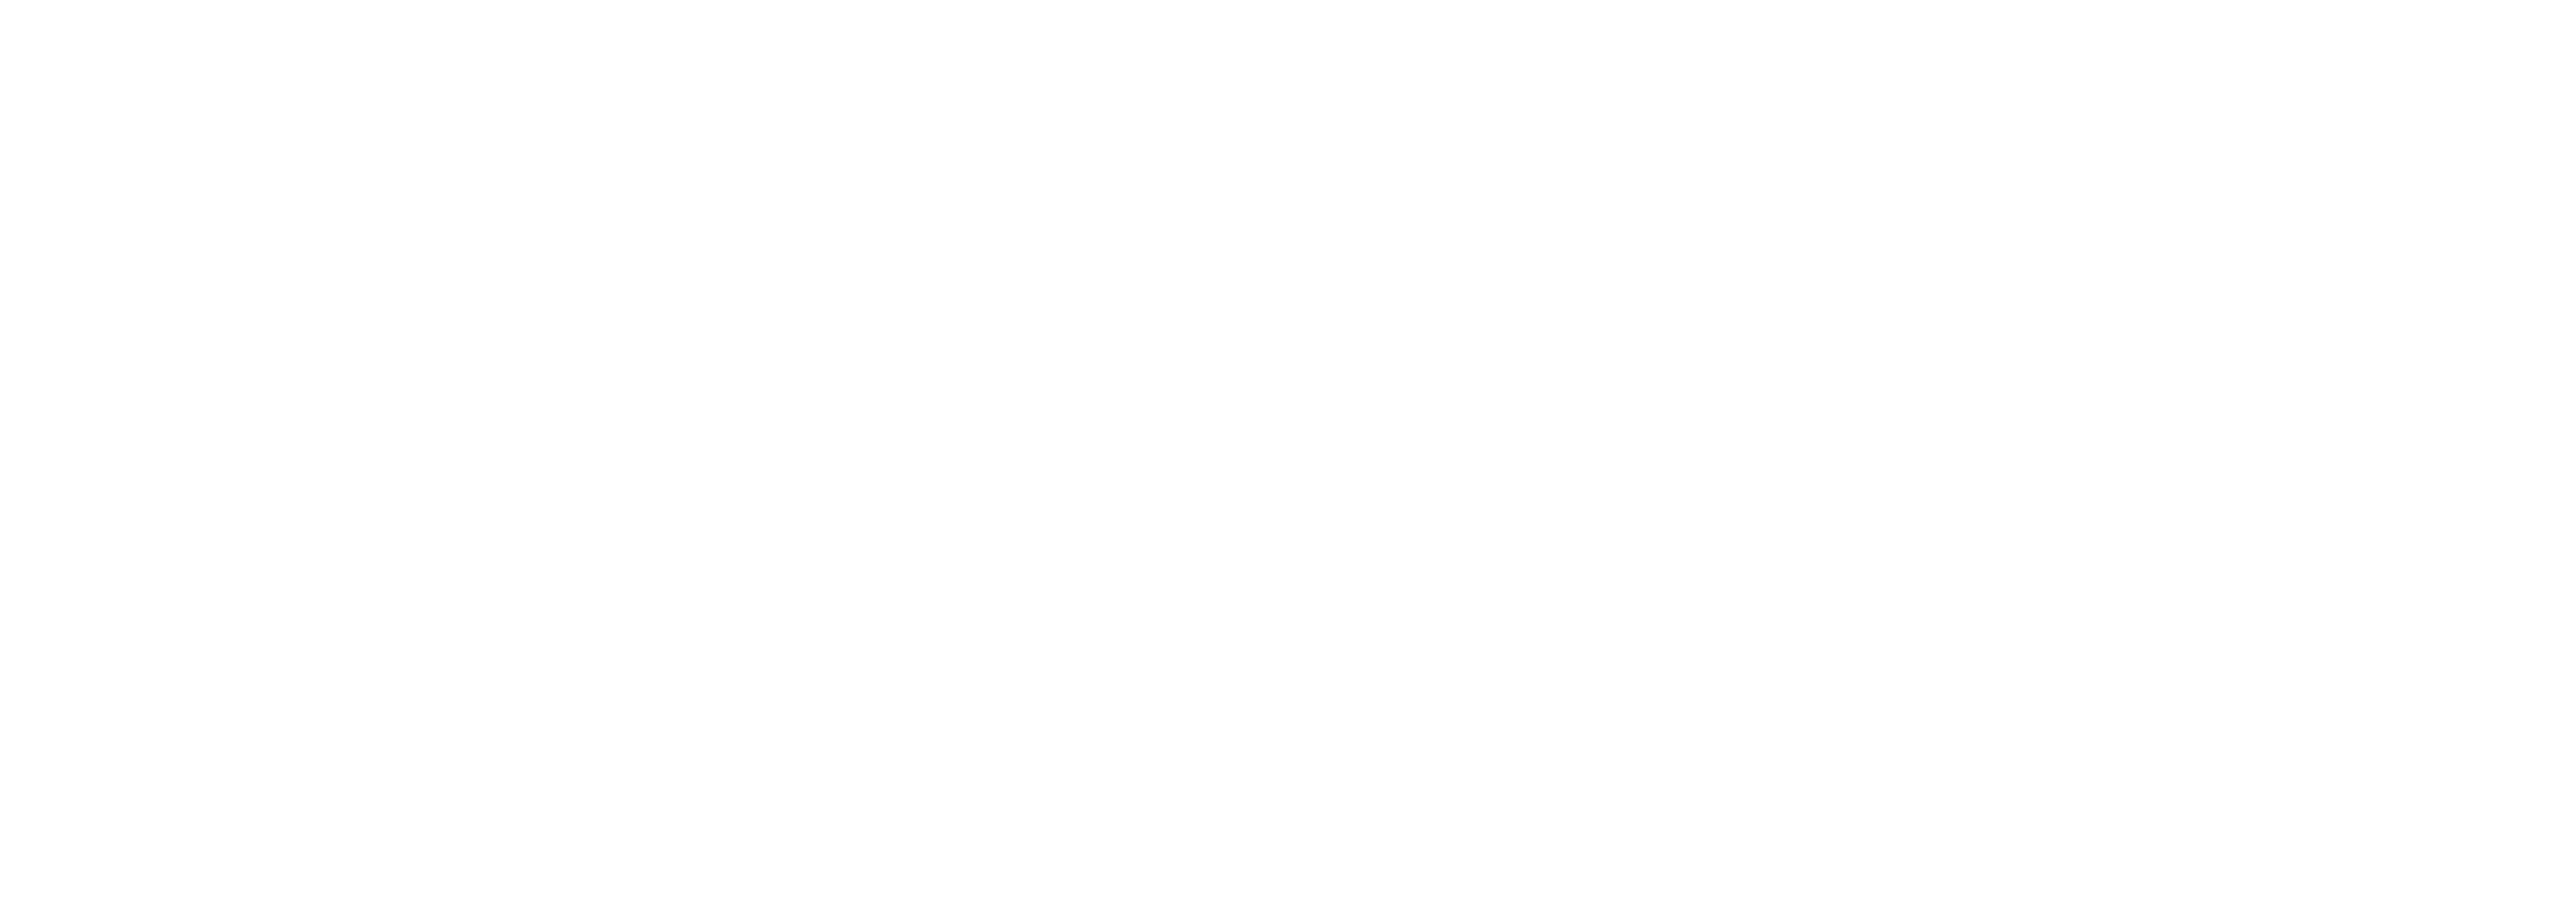 hotel haunstetterhof logo